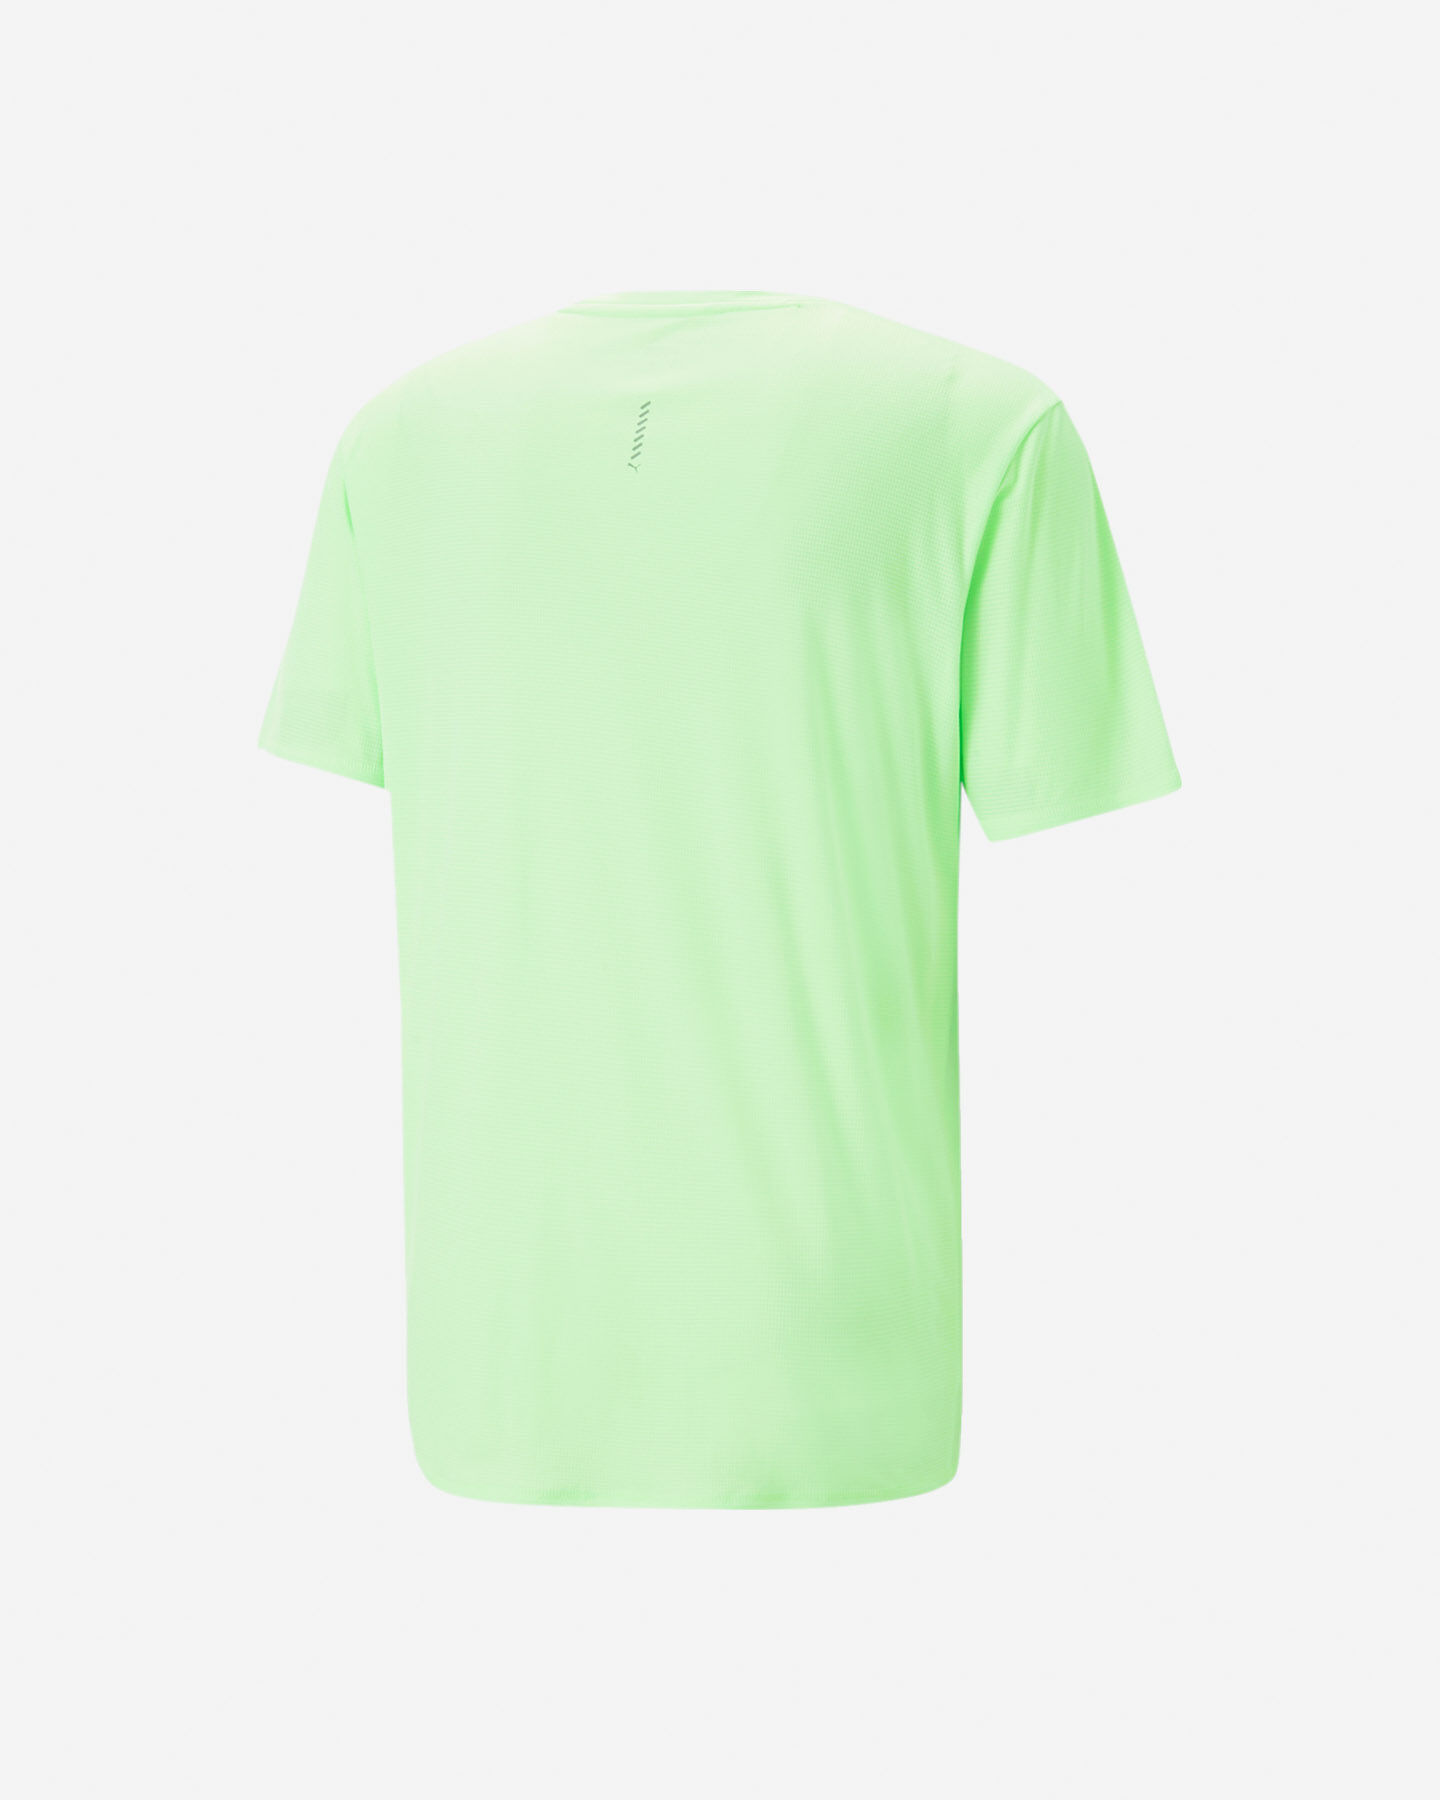  T-Shirt running PUMA FAVORITE M S5540537|34|S scatto 1